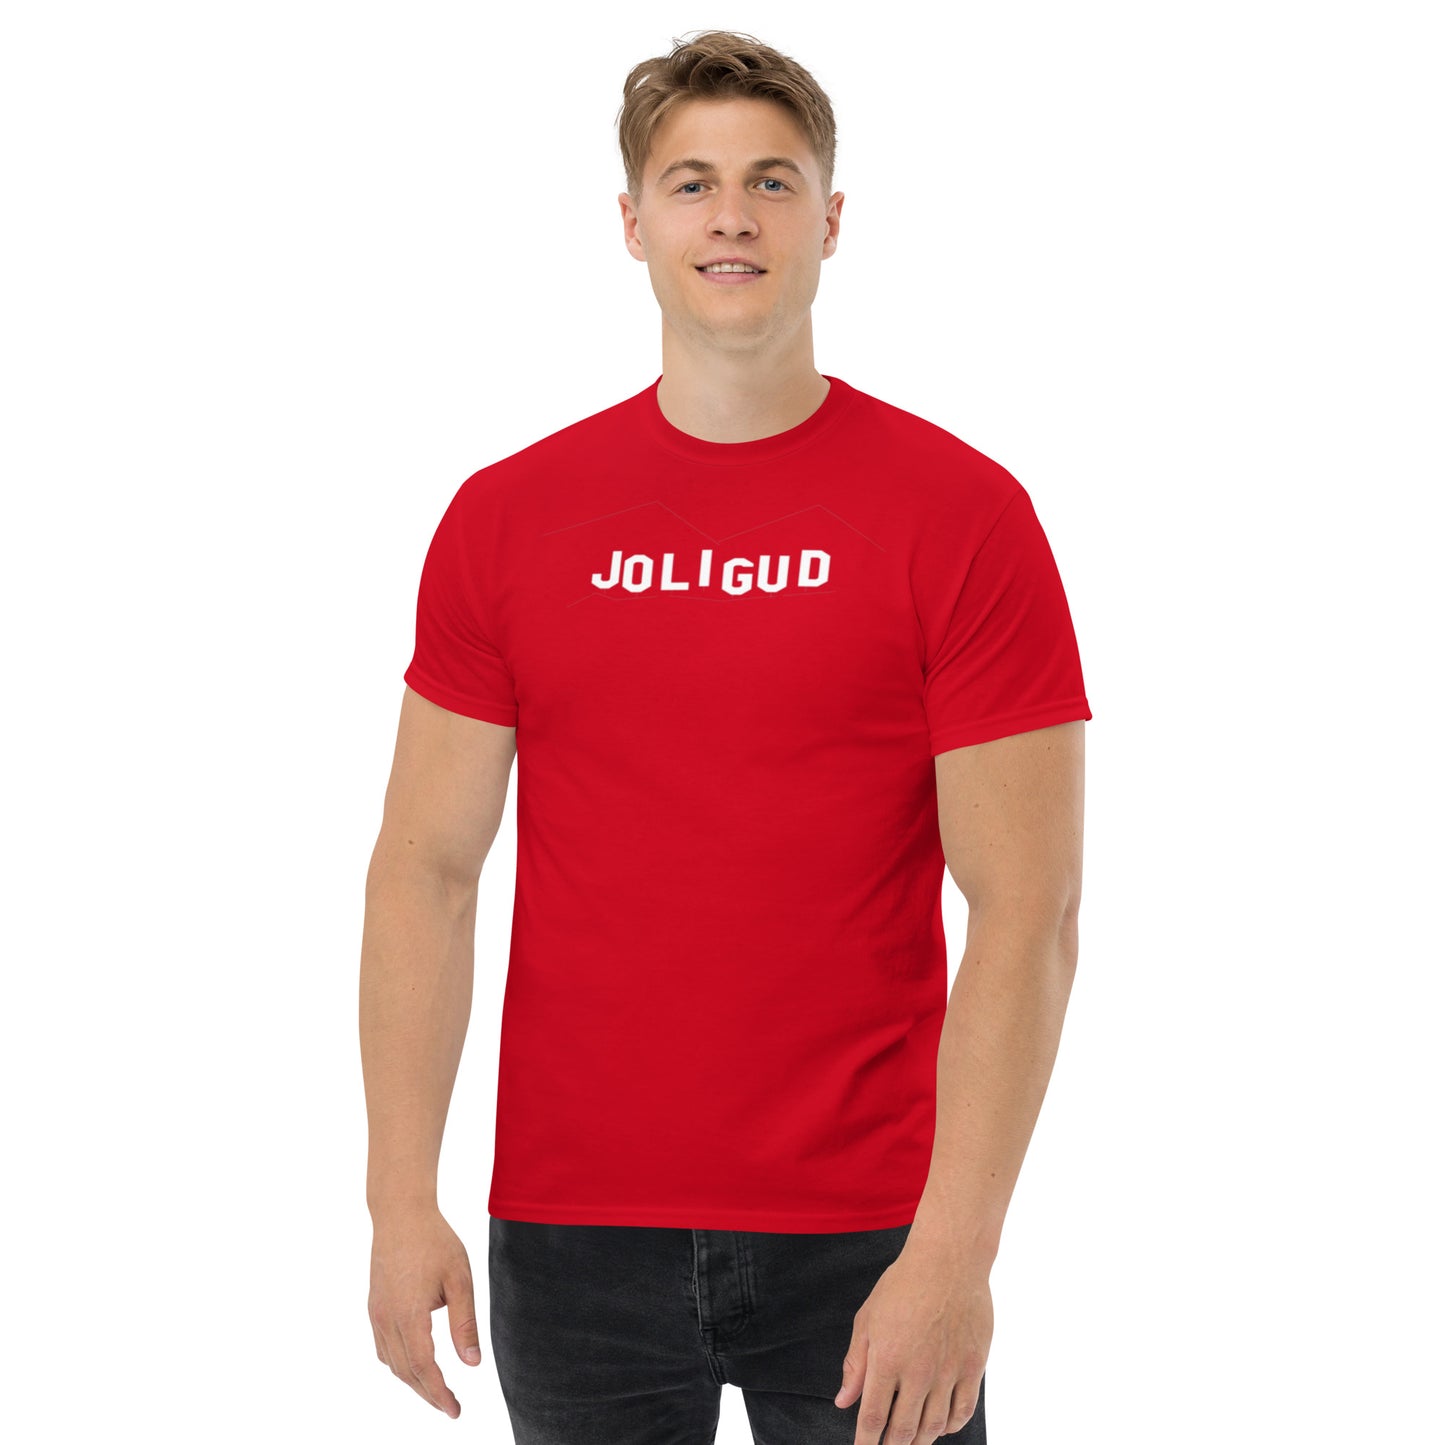 T-shirt "joligud"